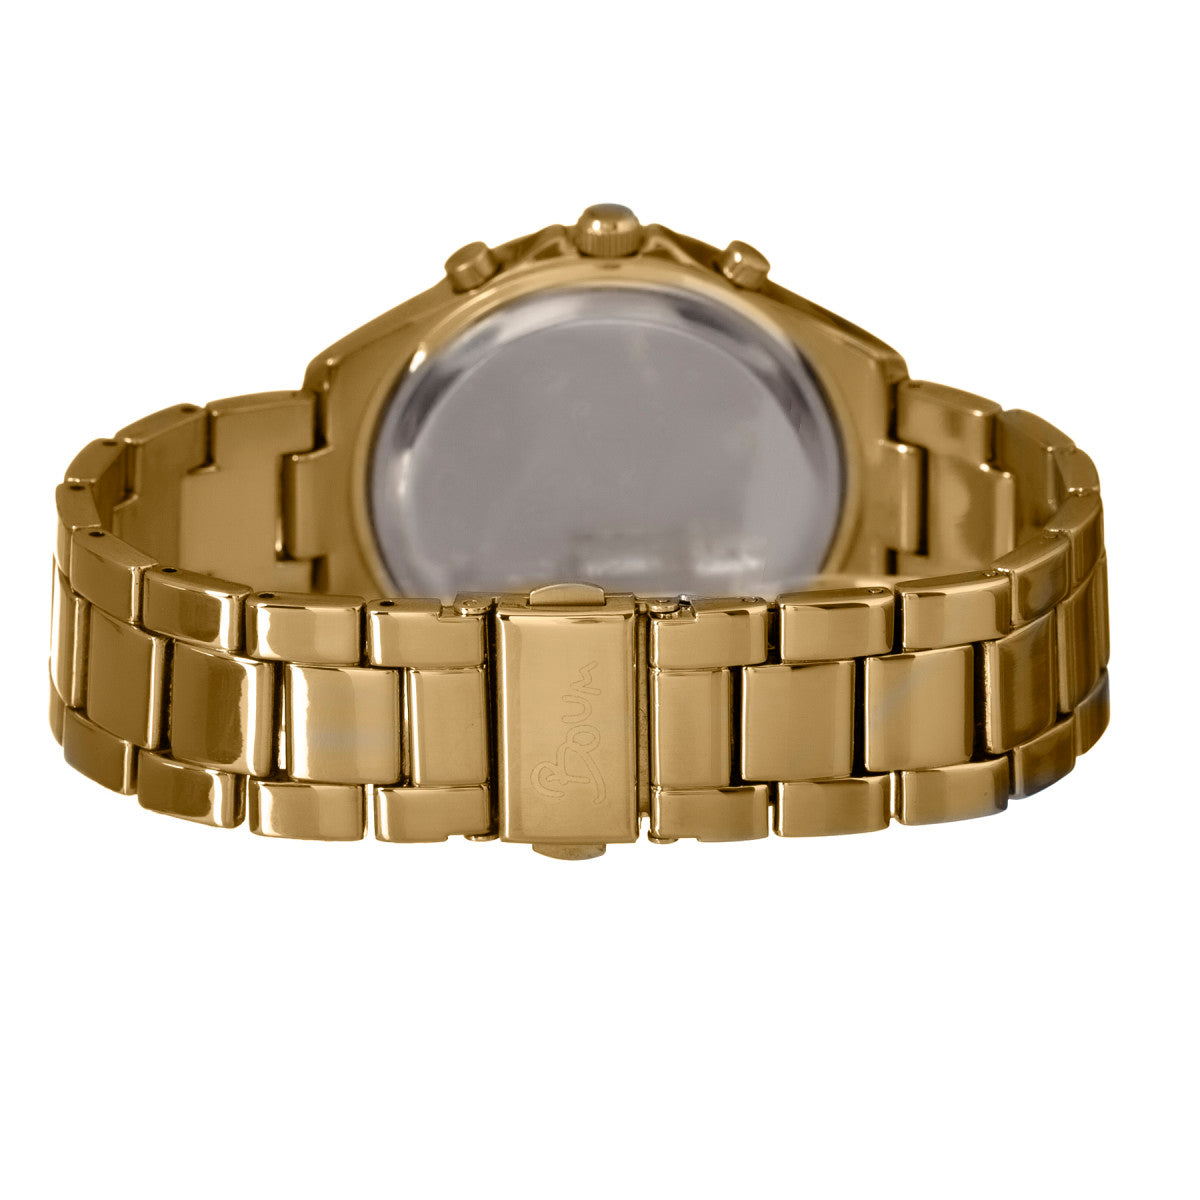 Boum Baiser Ladies Bracelet Watch w/ Day/Date - Gold - BOUBM1503